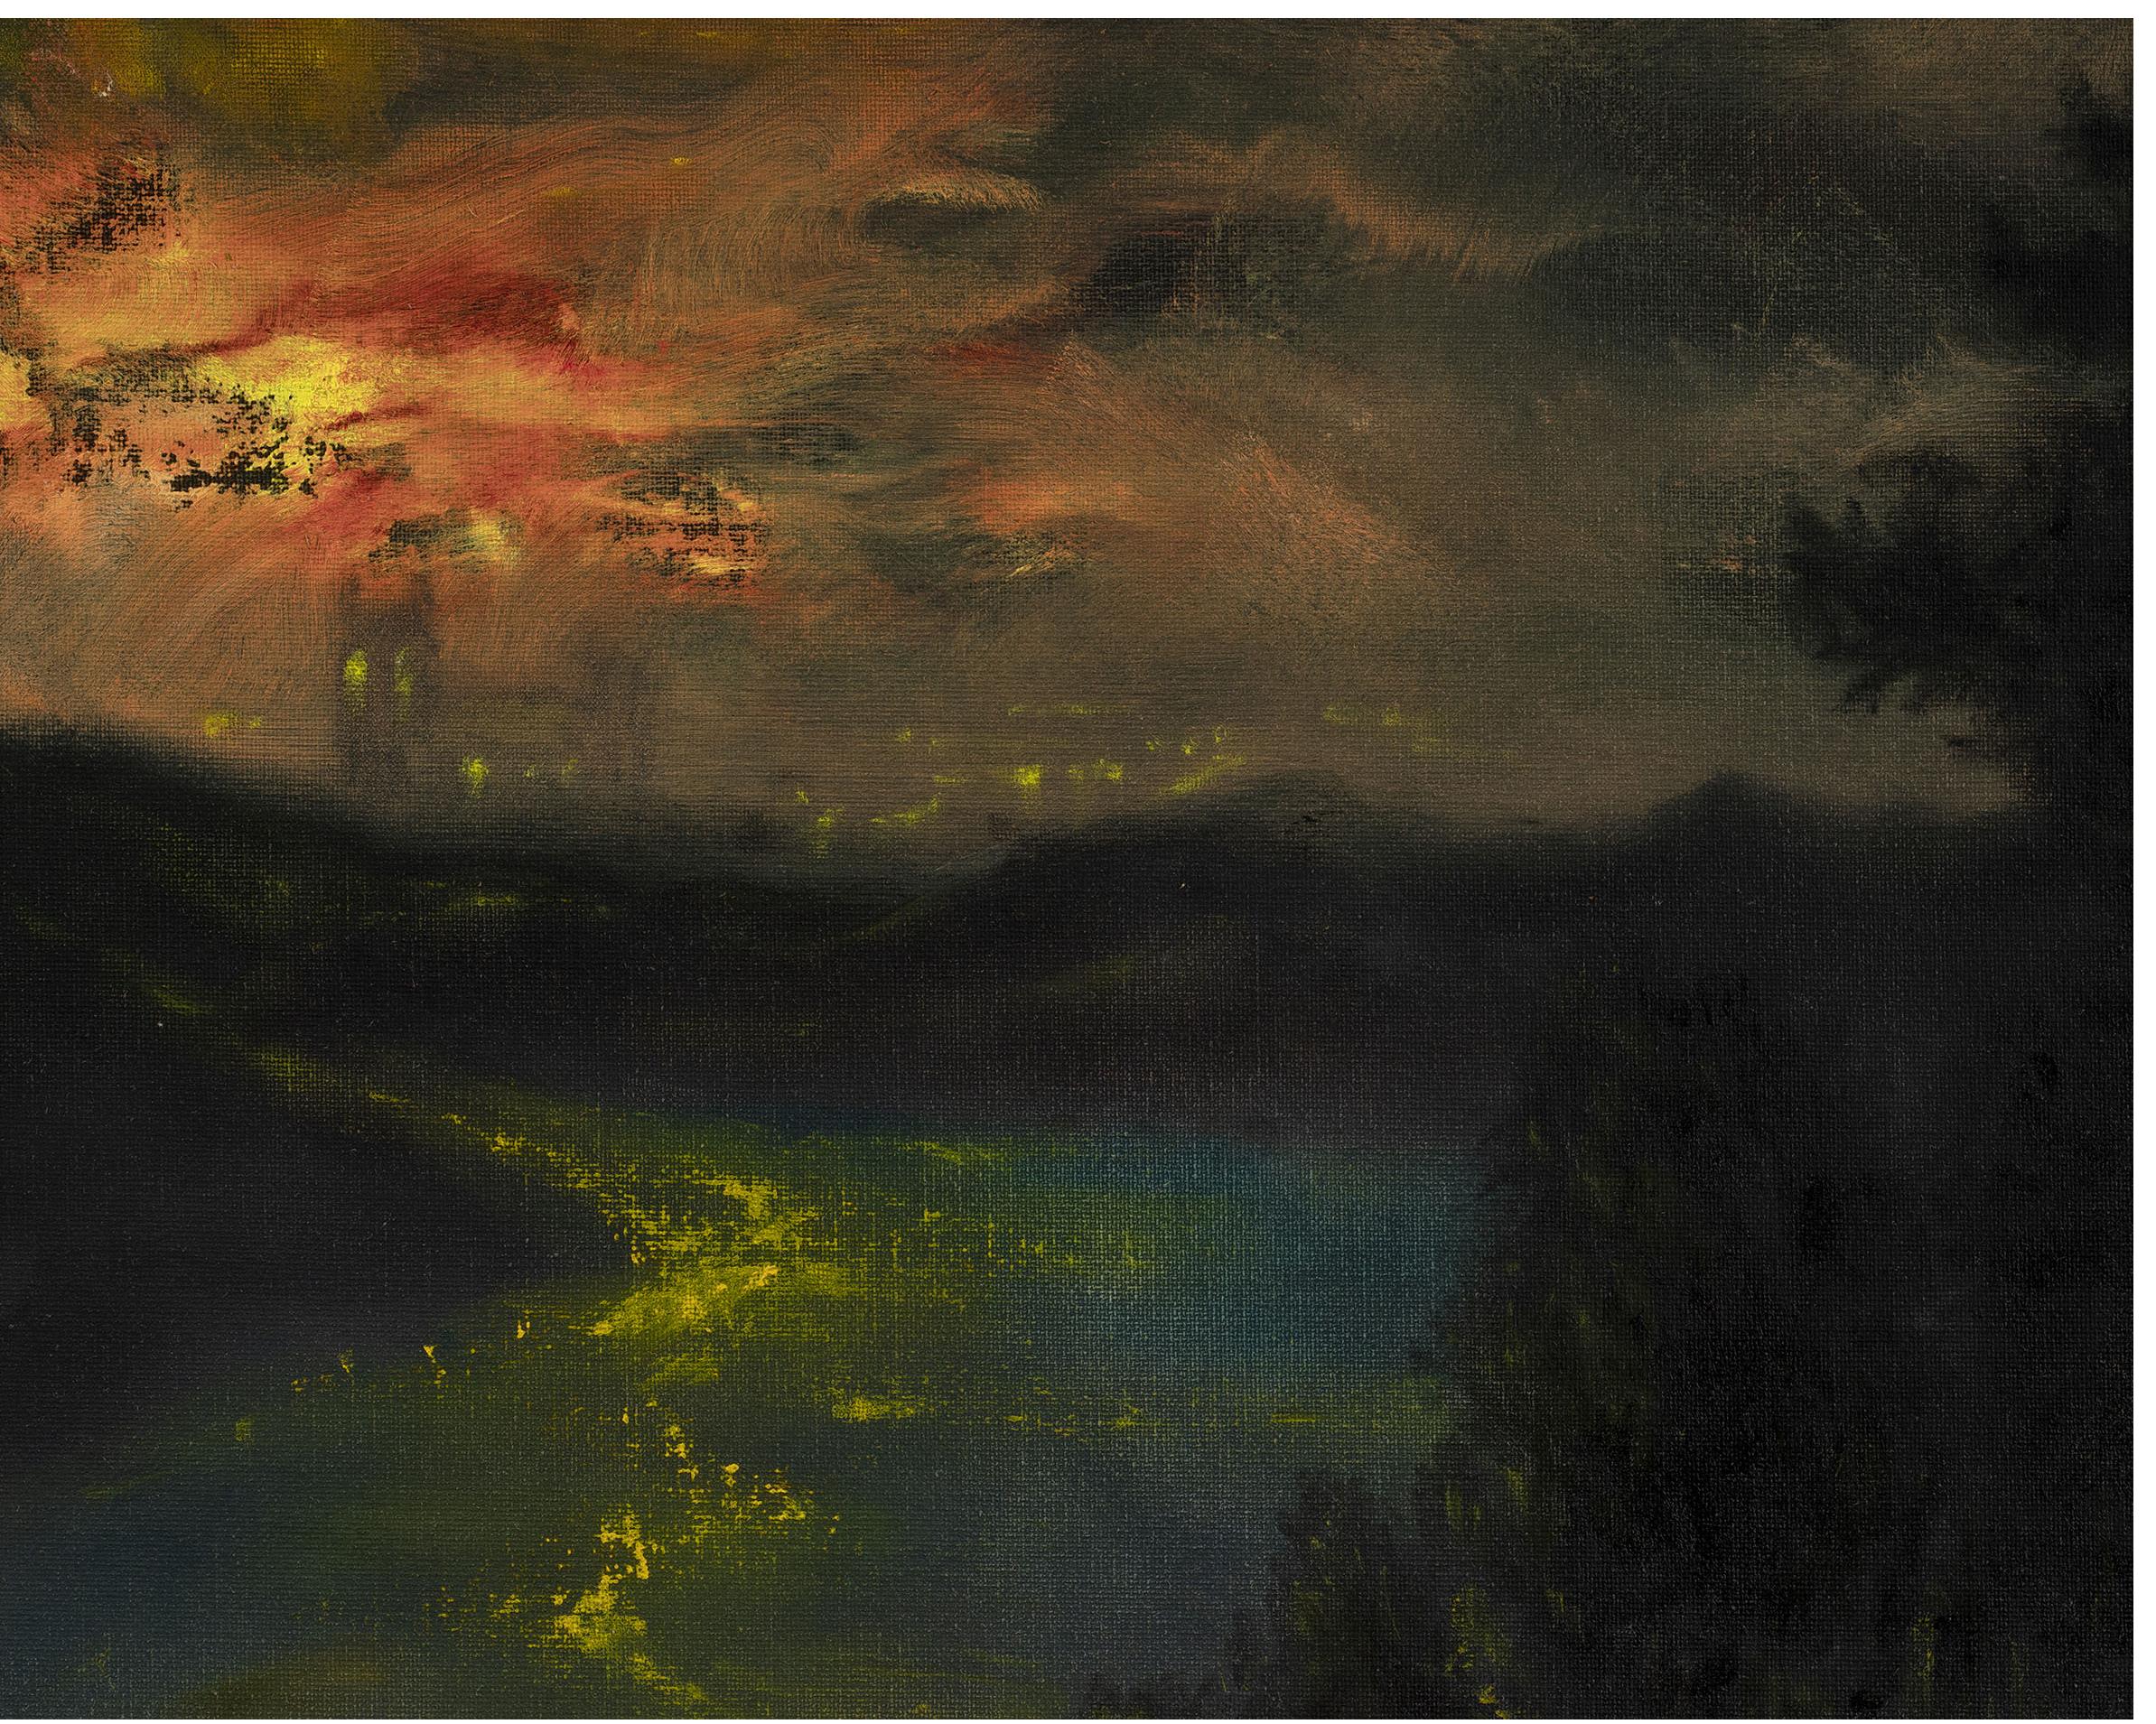 Matthew Bateson - "The Burning Sky", oil on canvas board, 30 x 40 cm